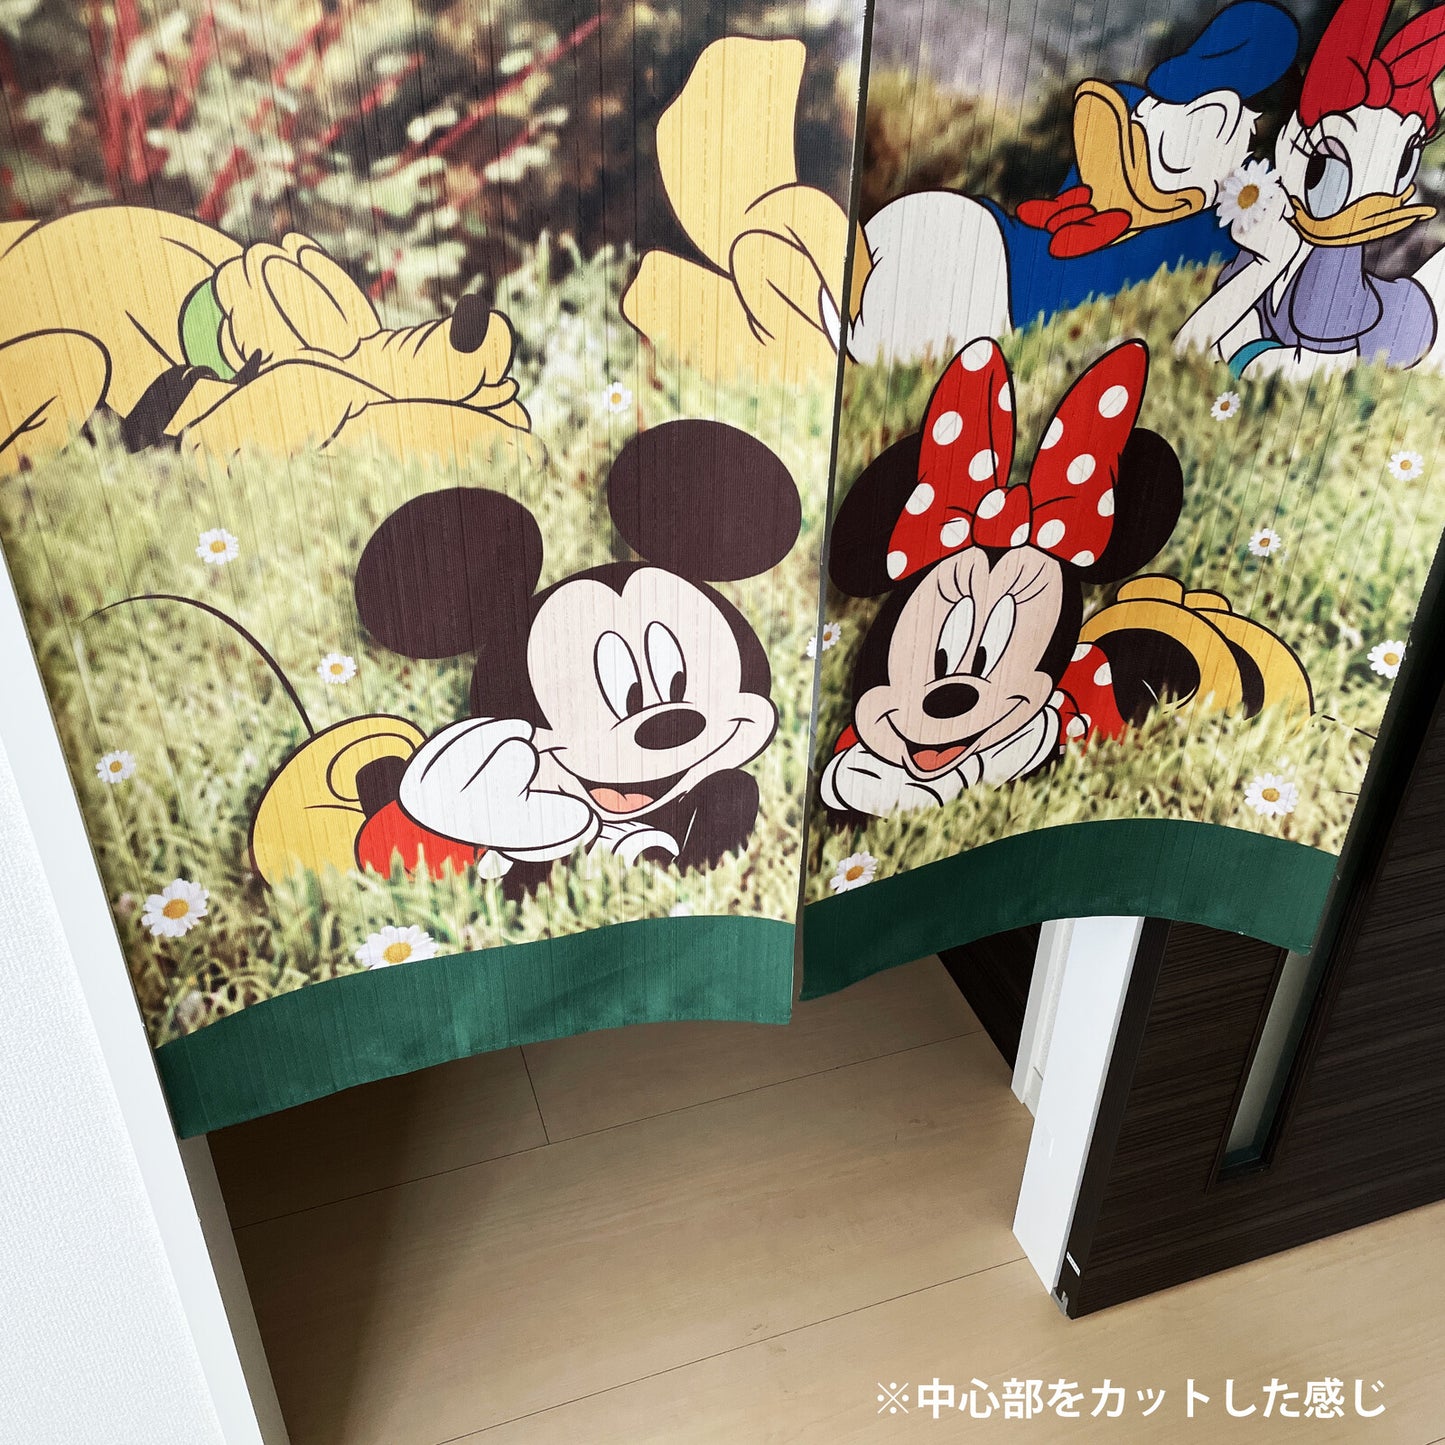  Disney Characters Door Curtain Made in Japan 